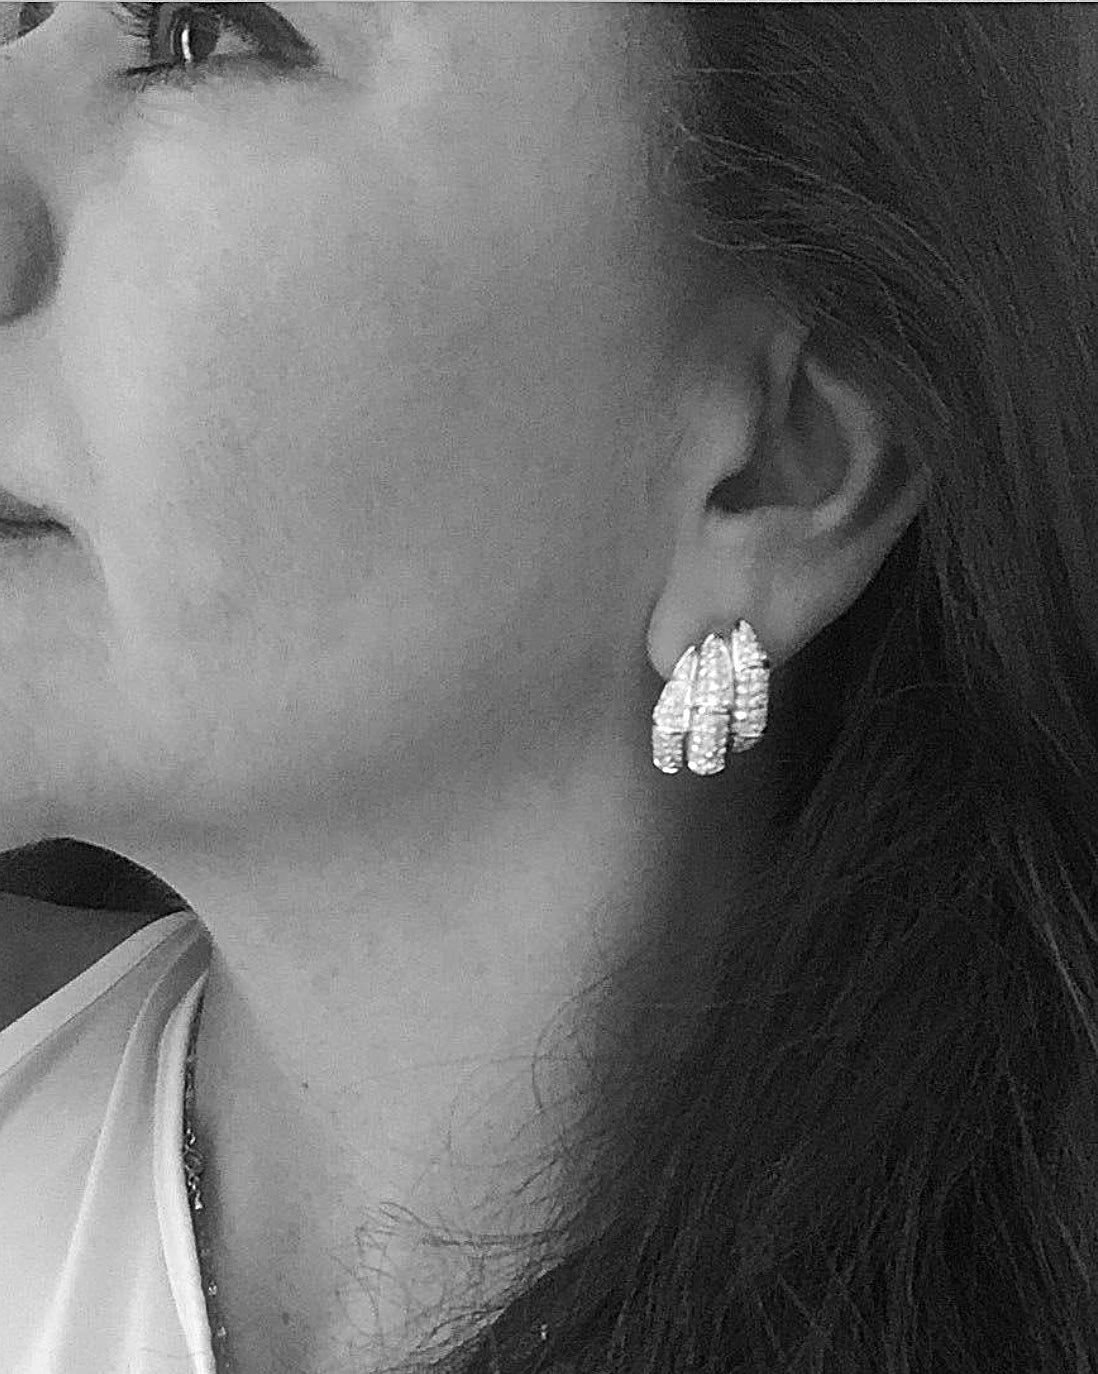 Diamond Drop Earrings 18 Karat White Gold